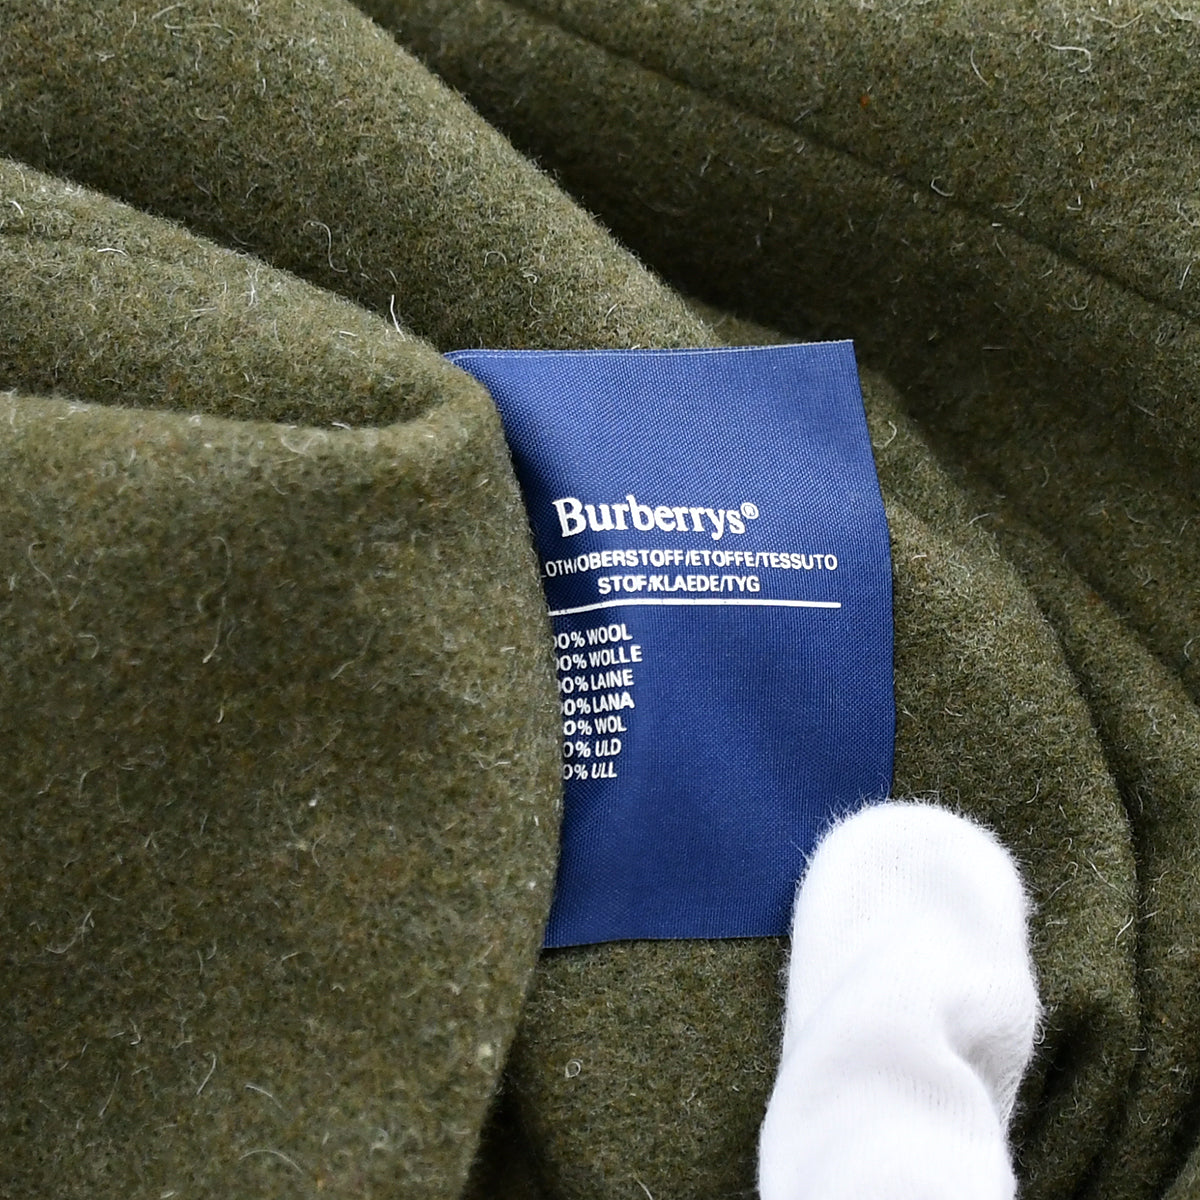 Burberrys Trench Coat Khaki